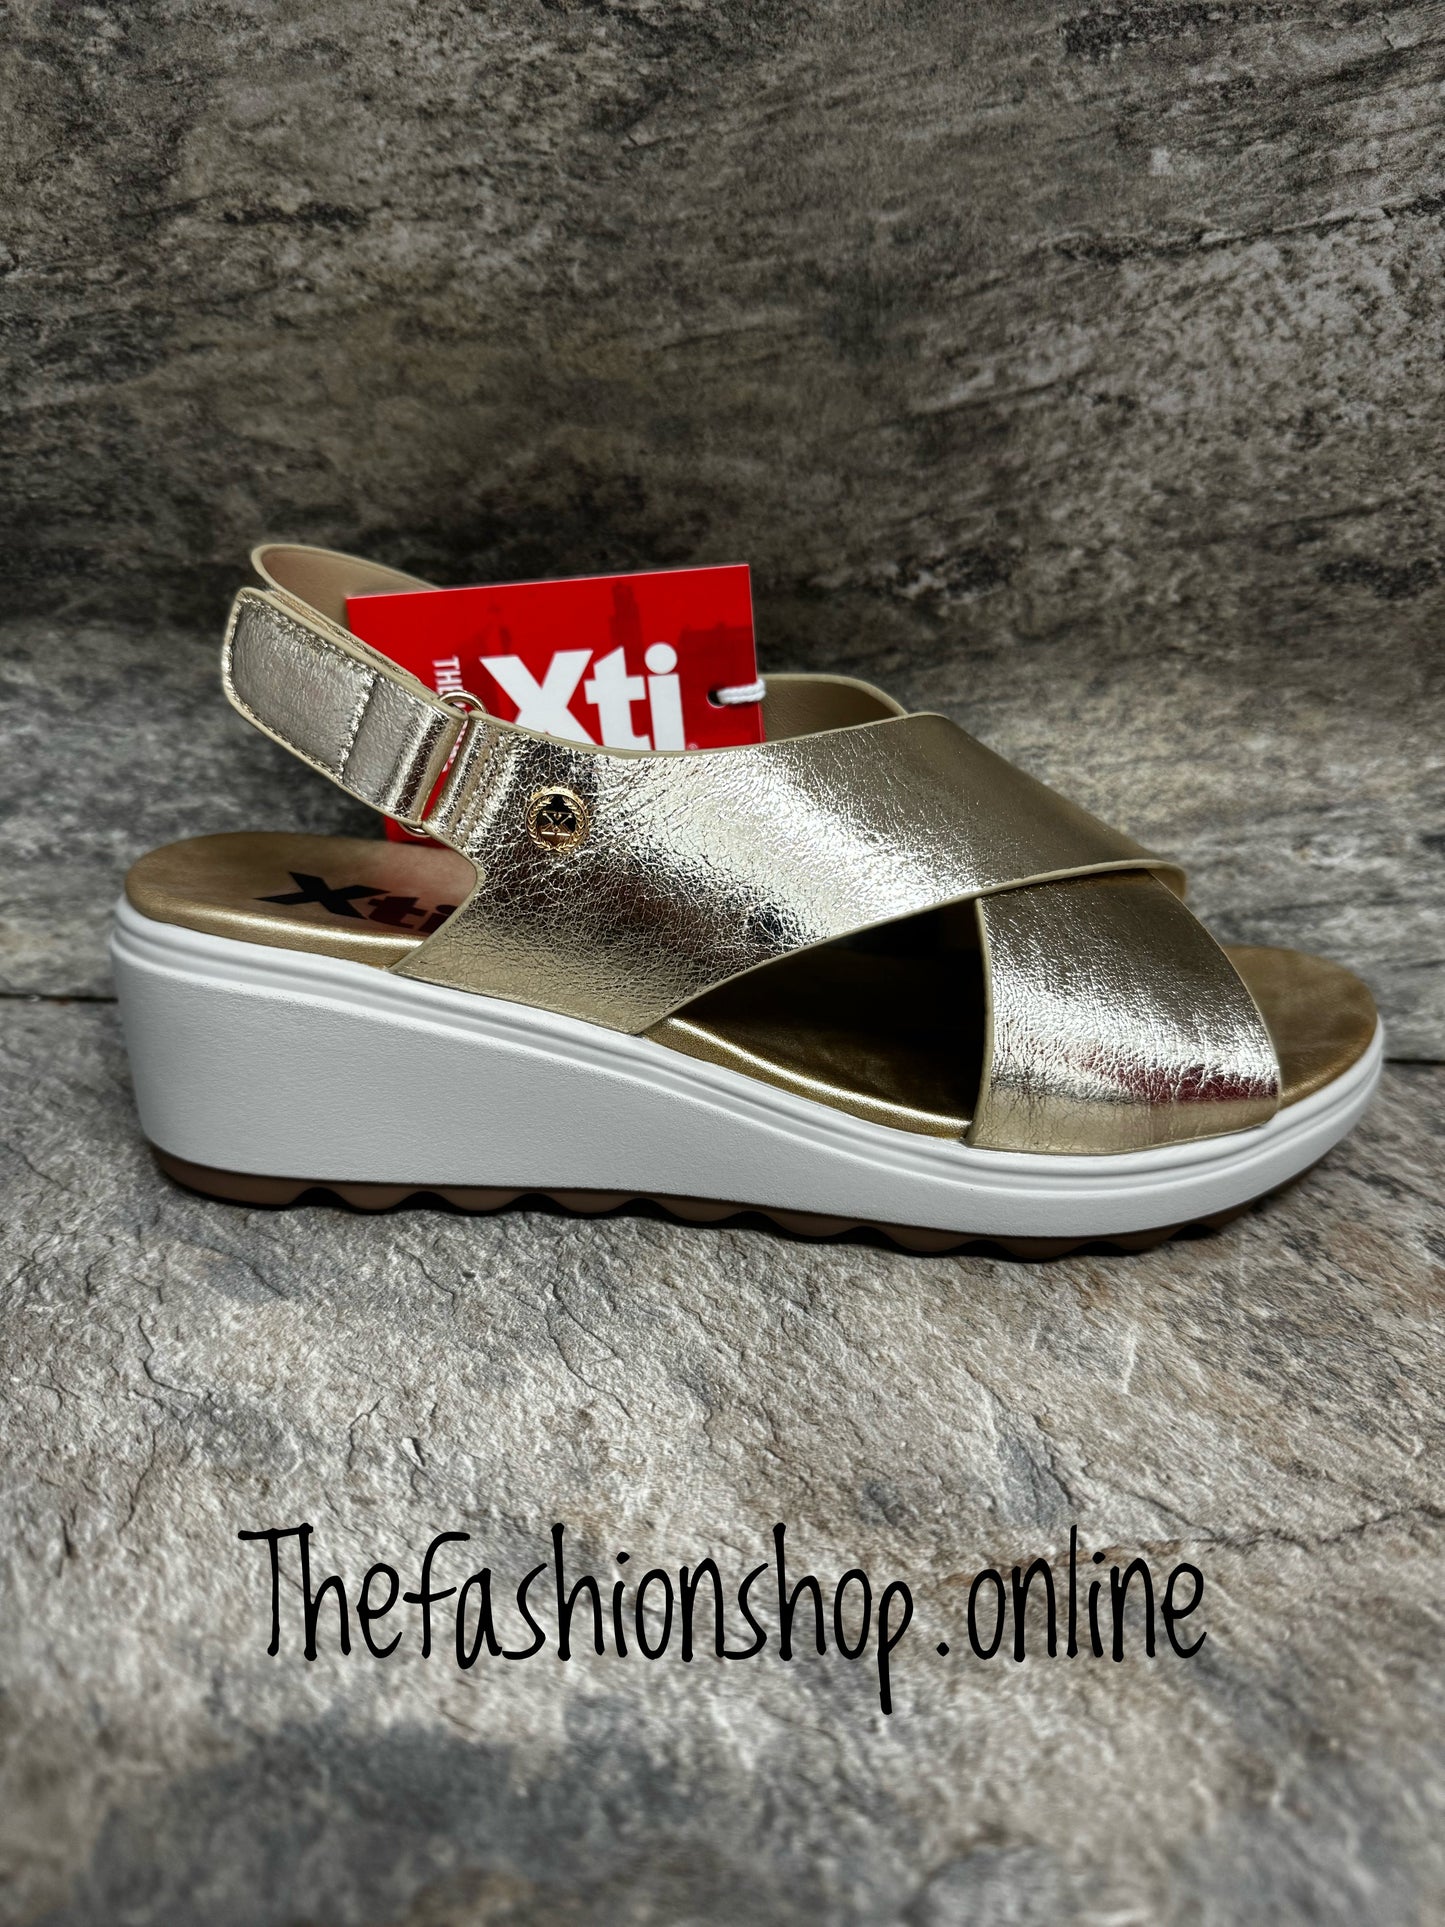 Xti Gold Criss Cross Sandals sizes 3-7